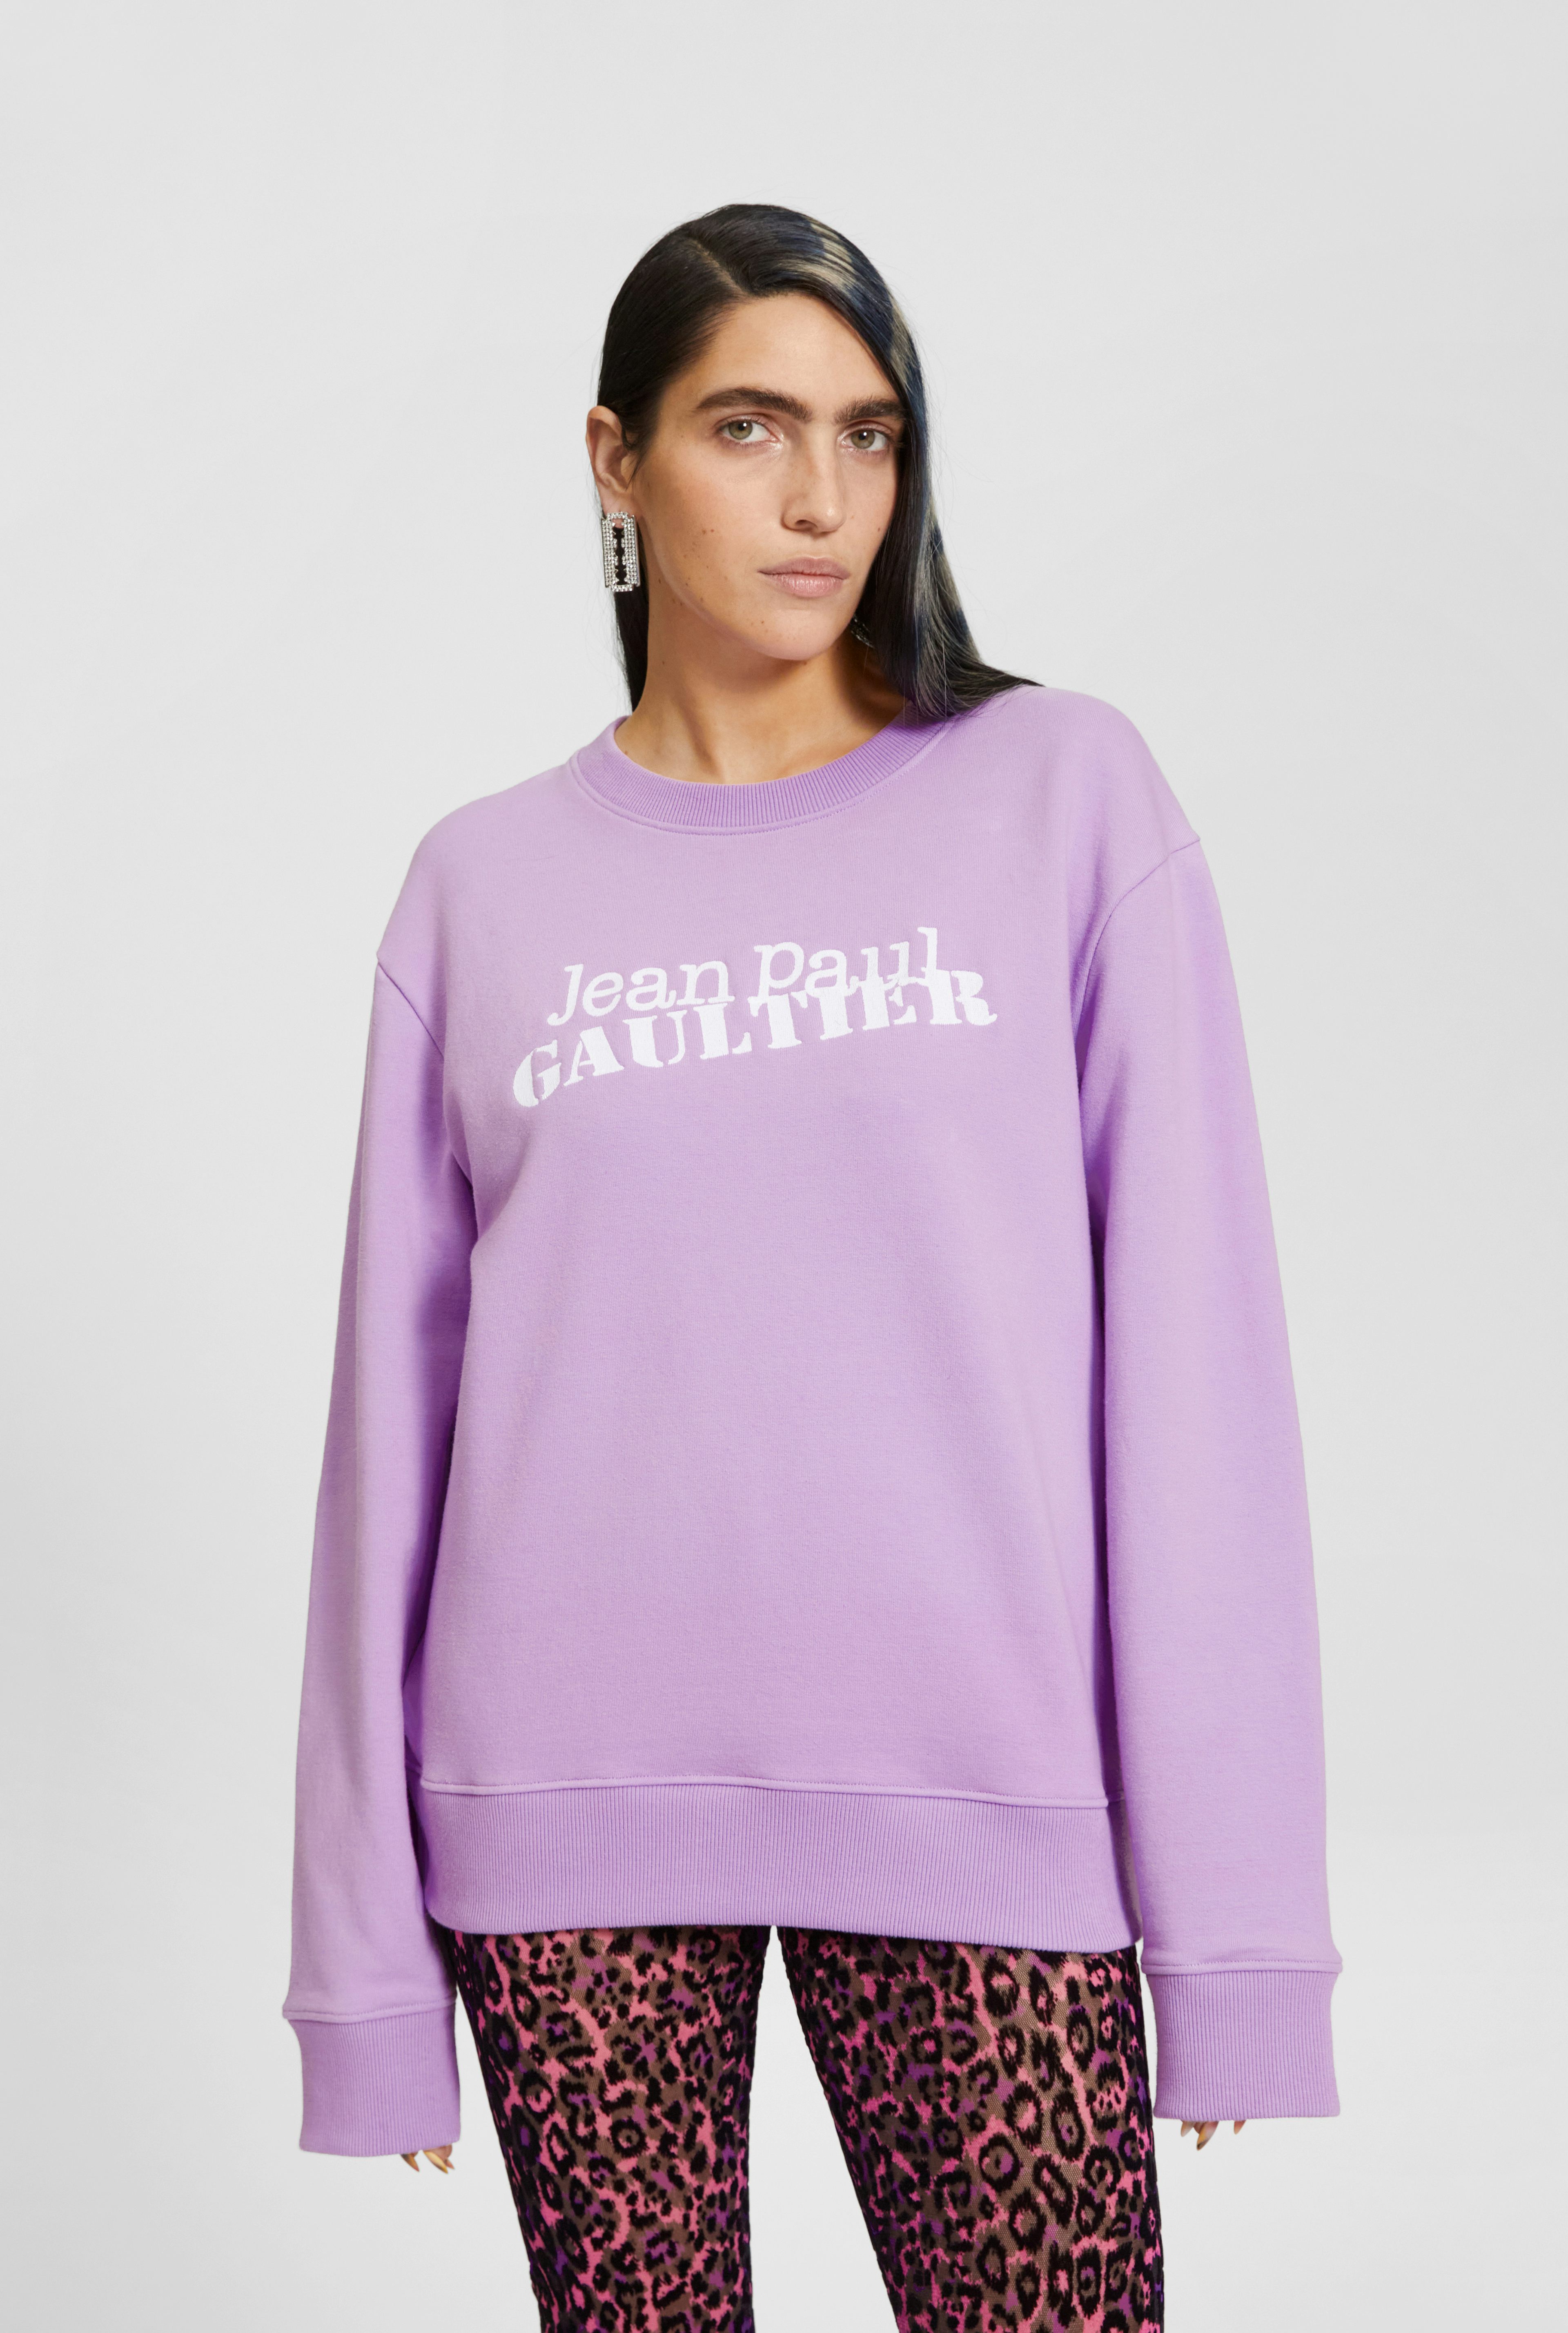 The Jean Paul Gaultier sweatshirt